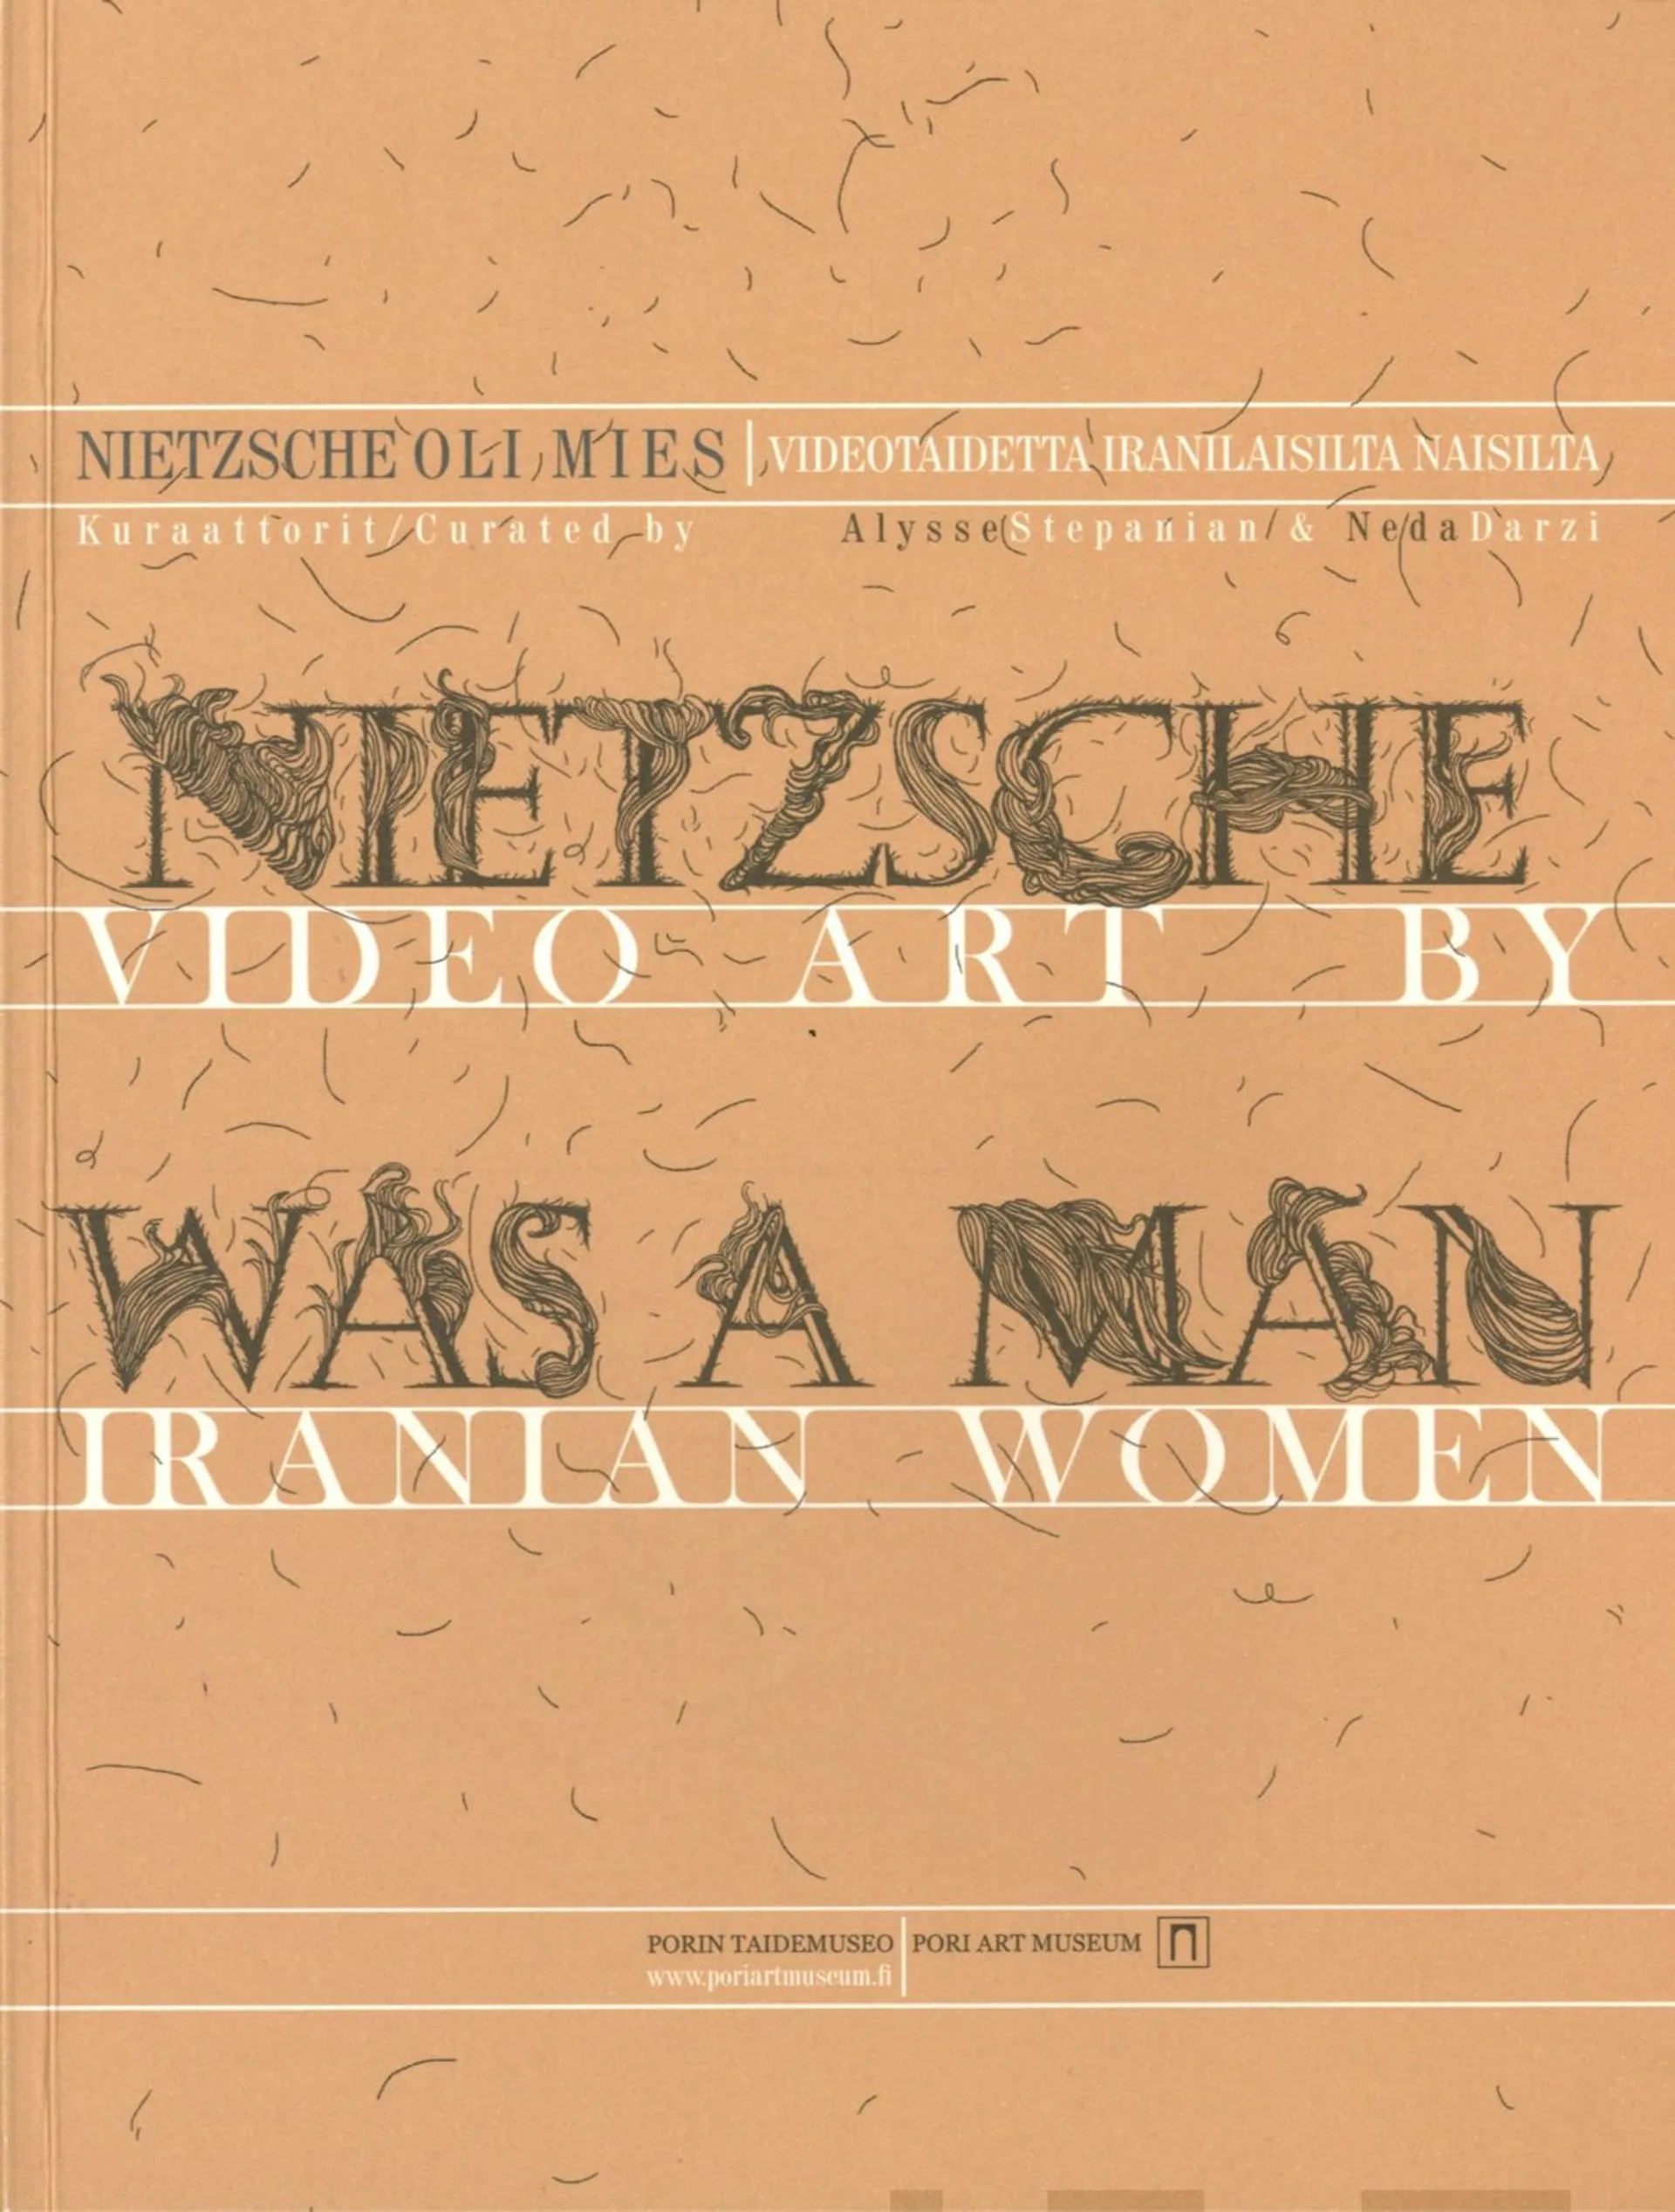 Hovi-Assad, Nietzsche oli mies - Nietzsche was a Man